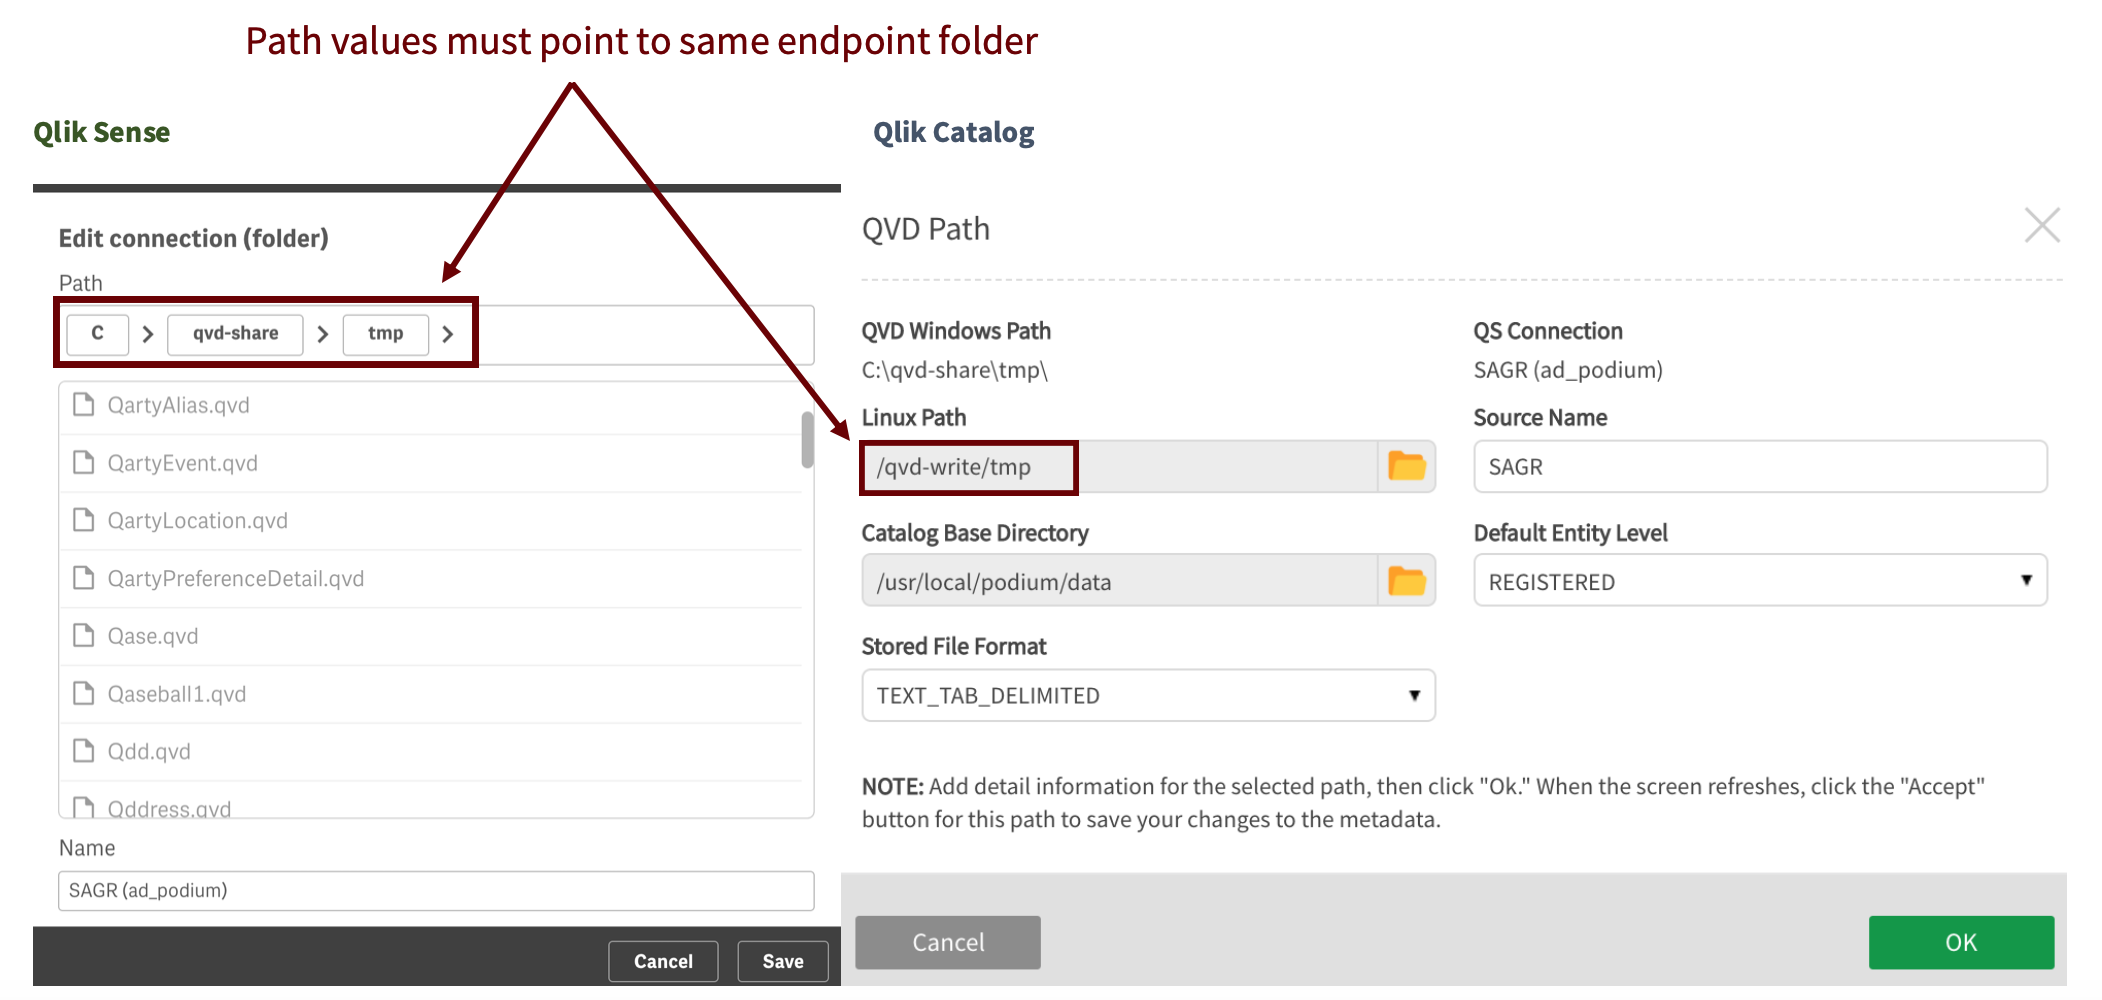 Ensure that Qlik Sense path and Catalog Linux path endpoint folder is the same